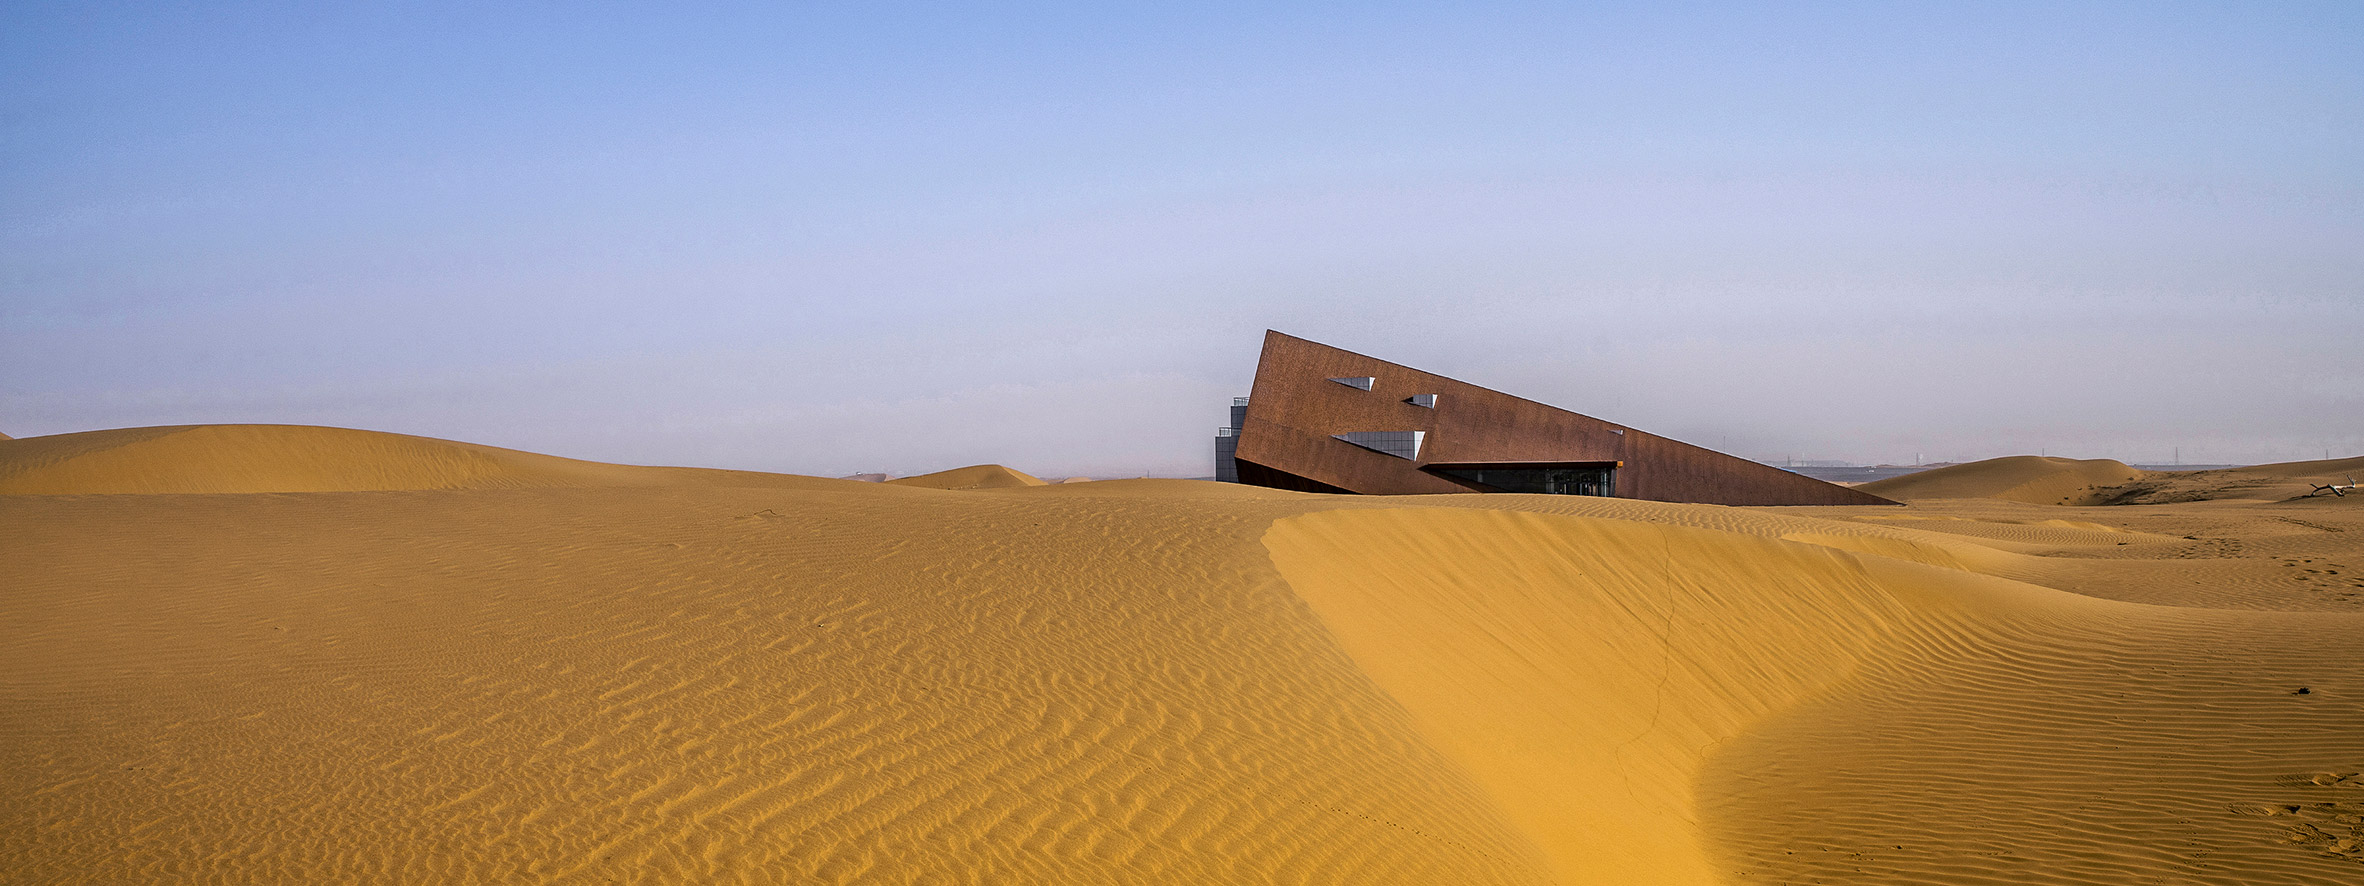 Weathering steel building in Chinese desert